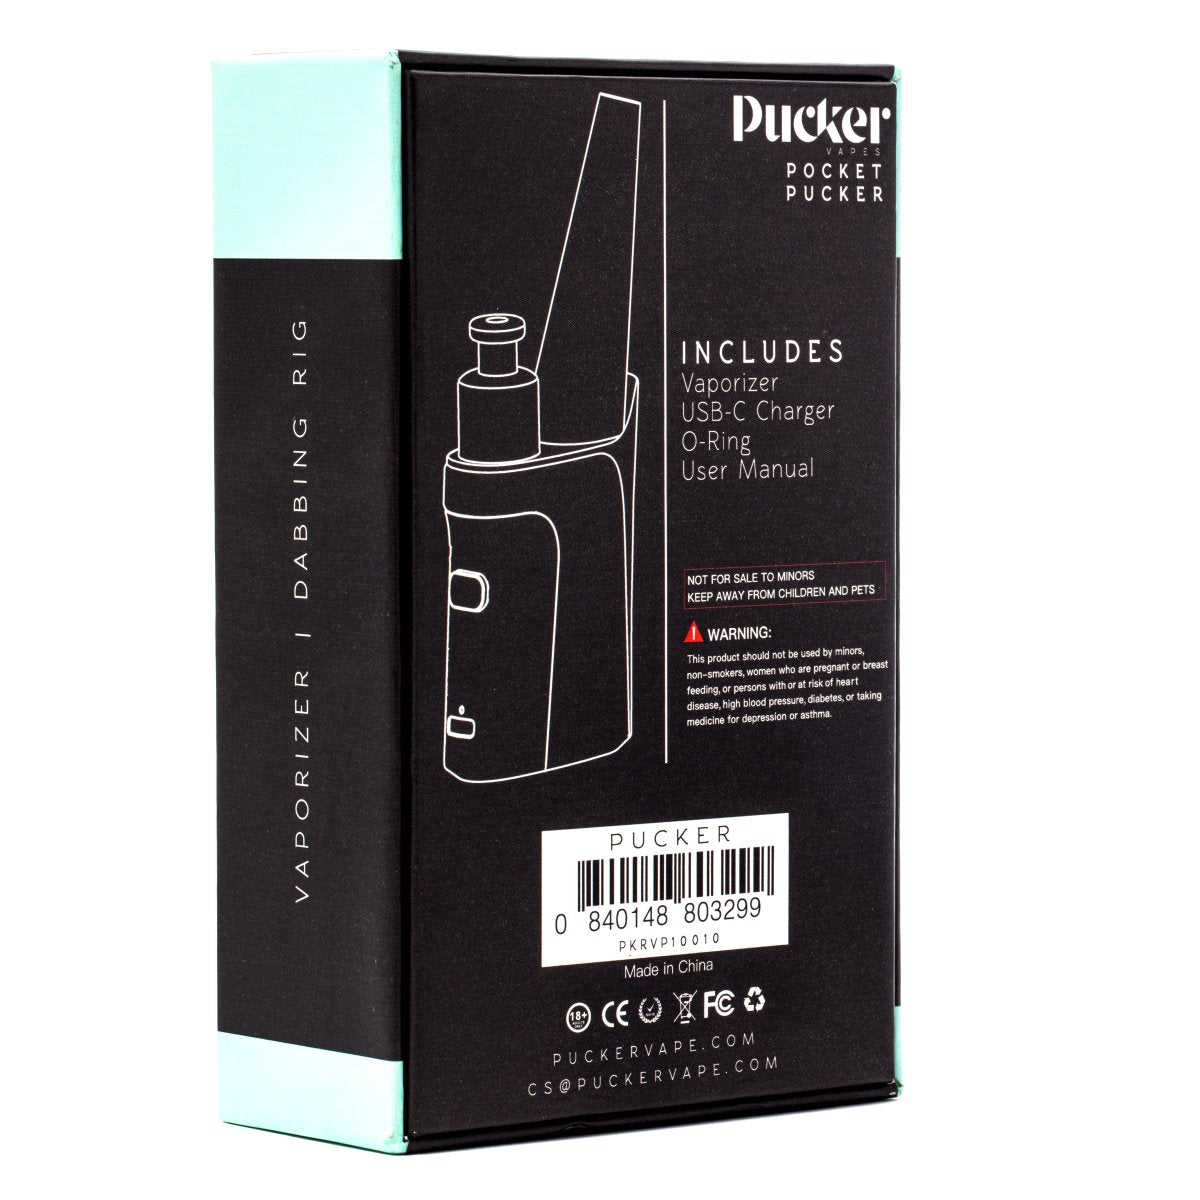 PUCKER "Pocket" Smoking Wax Vaporizer - (1 Count)-Vaporizers, E-Cigs, and Batteries